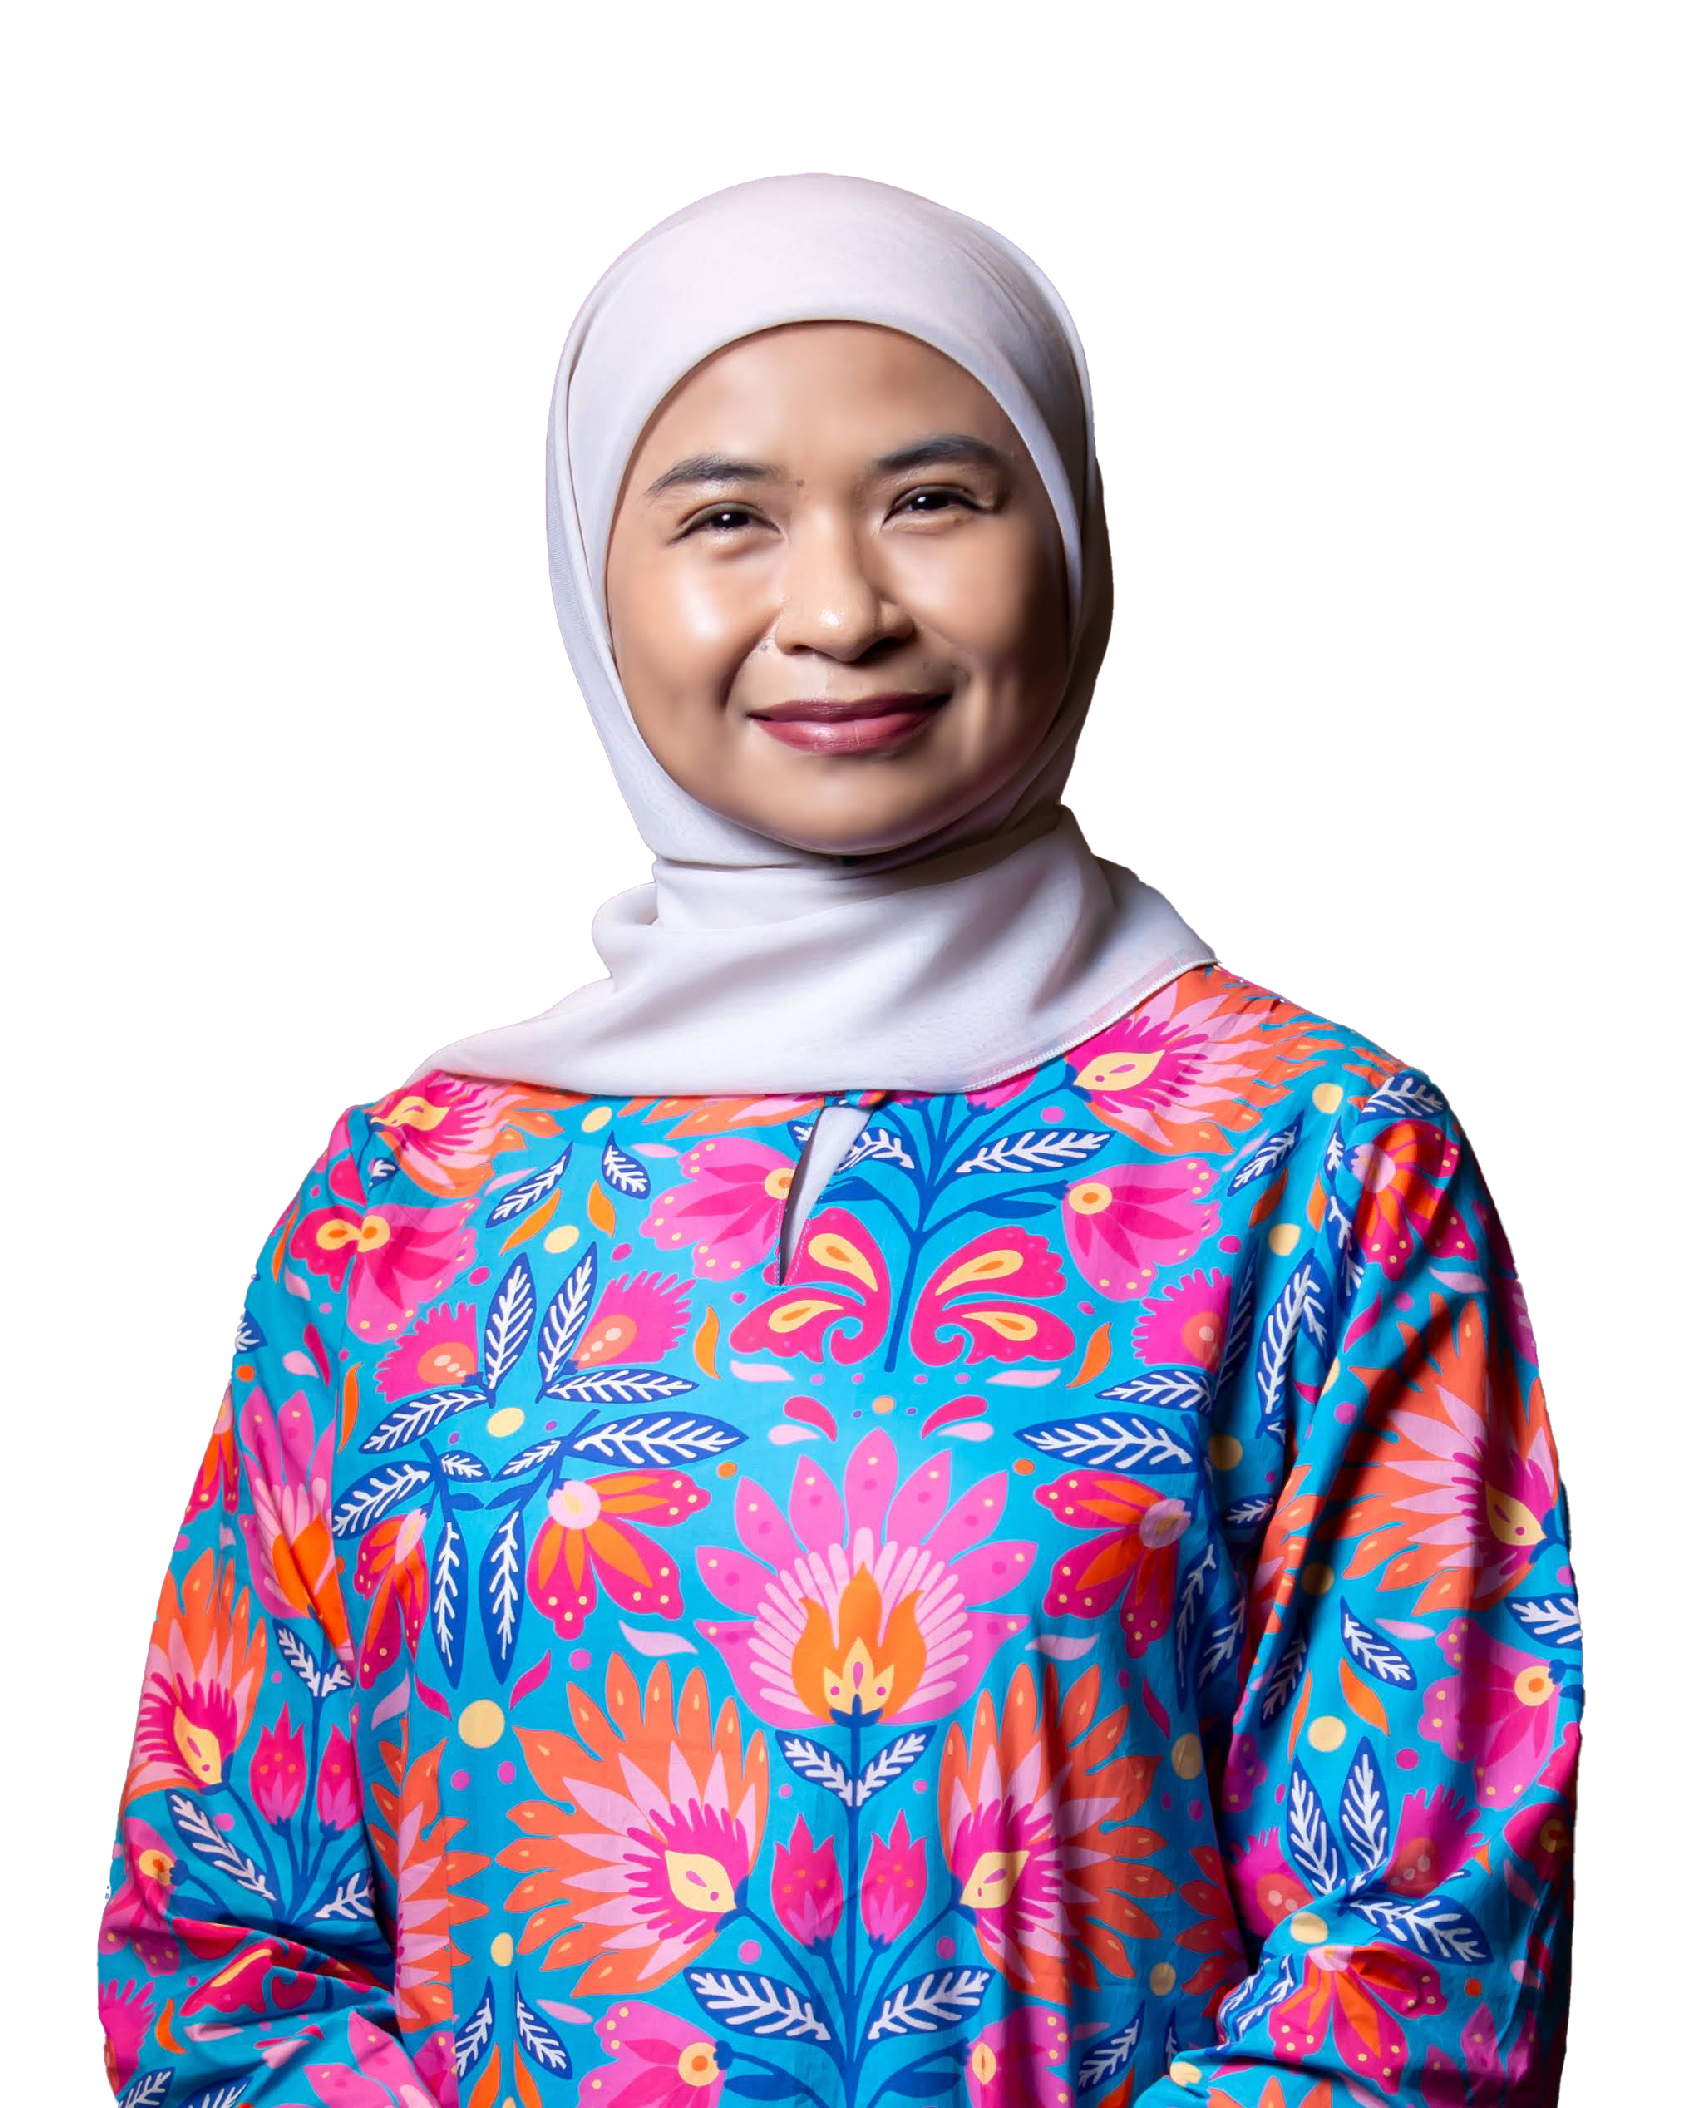 Dr. Anna Farazilah Mohd Salleh, a Rheumatology consultant in Gleneagles Hospital Kota Kinabalu